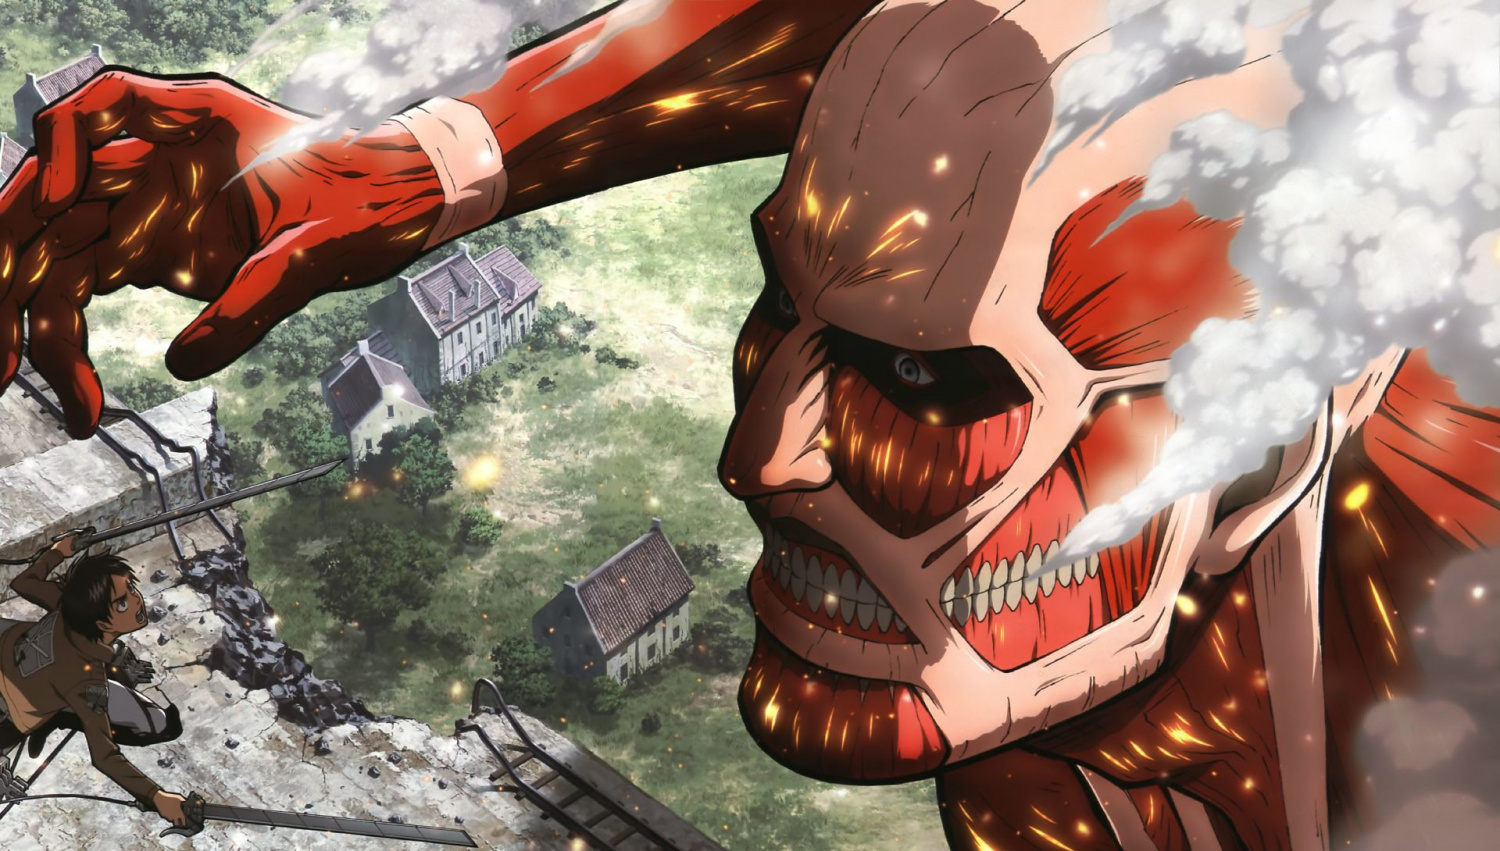 attack on titan manga 139 release date